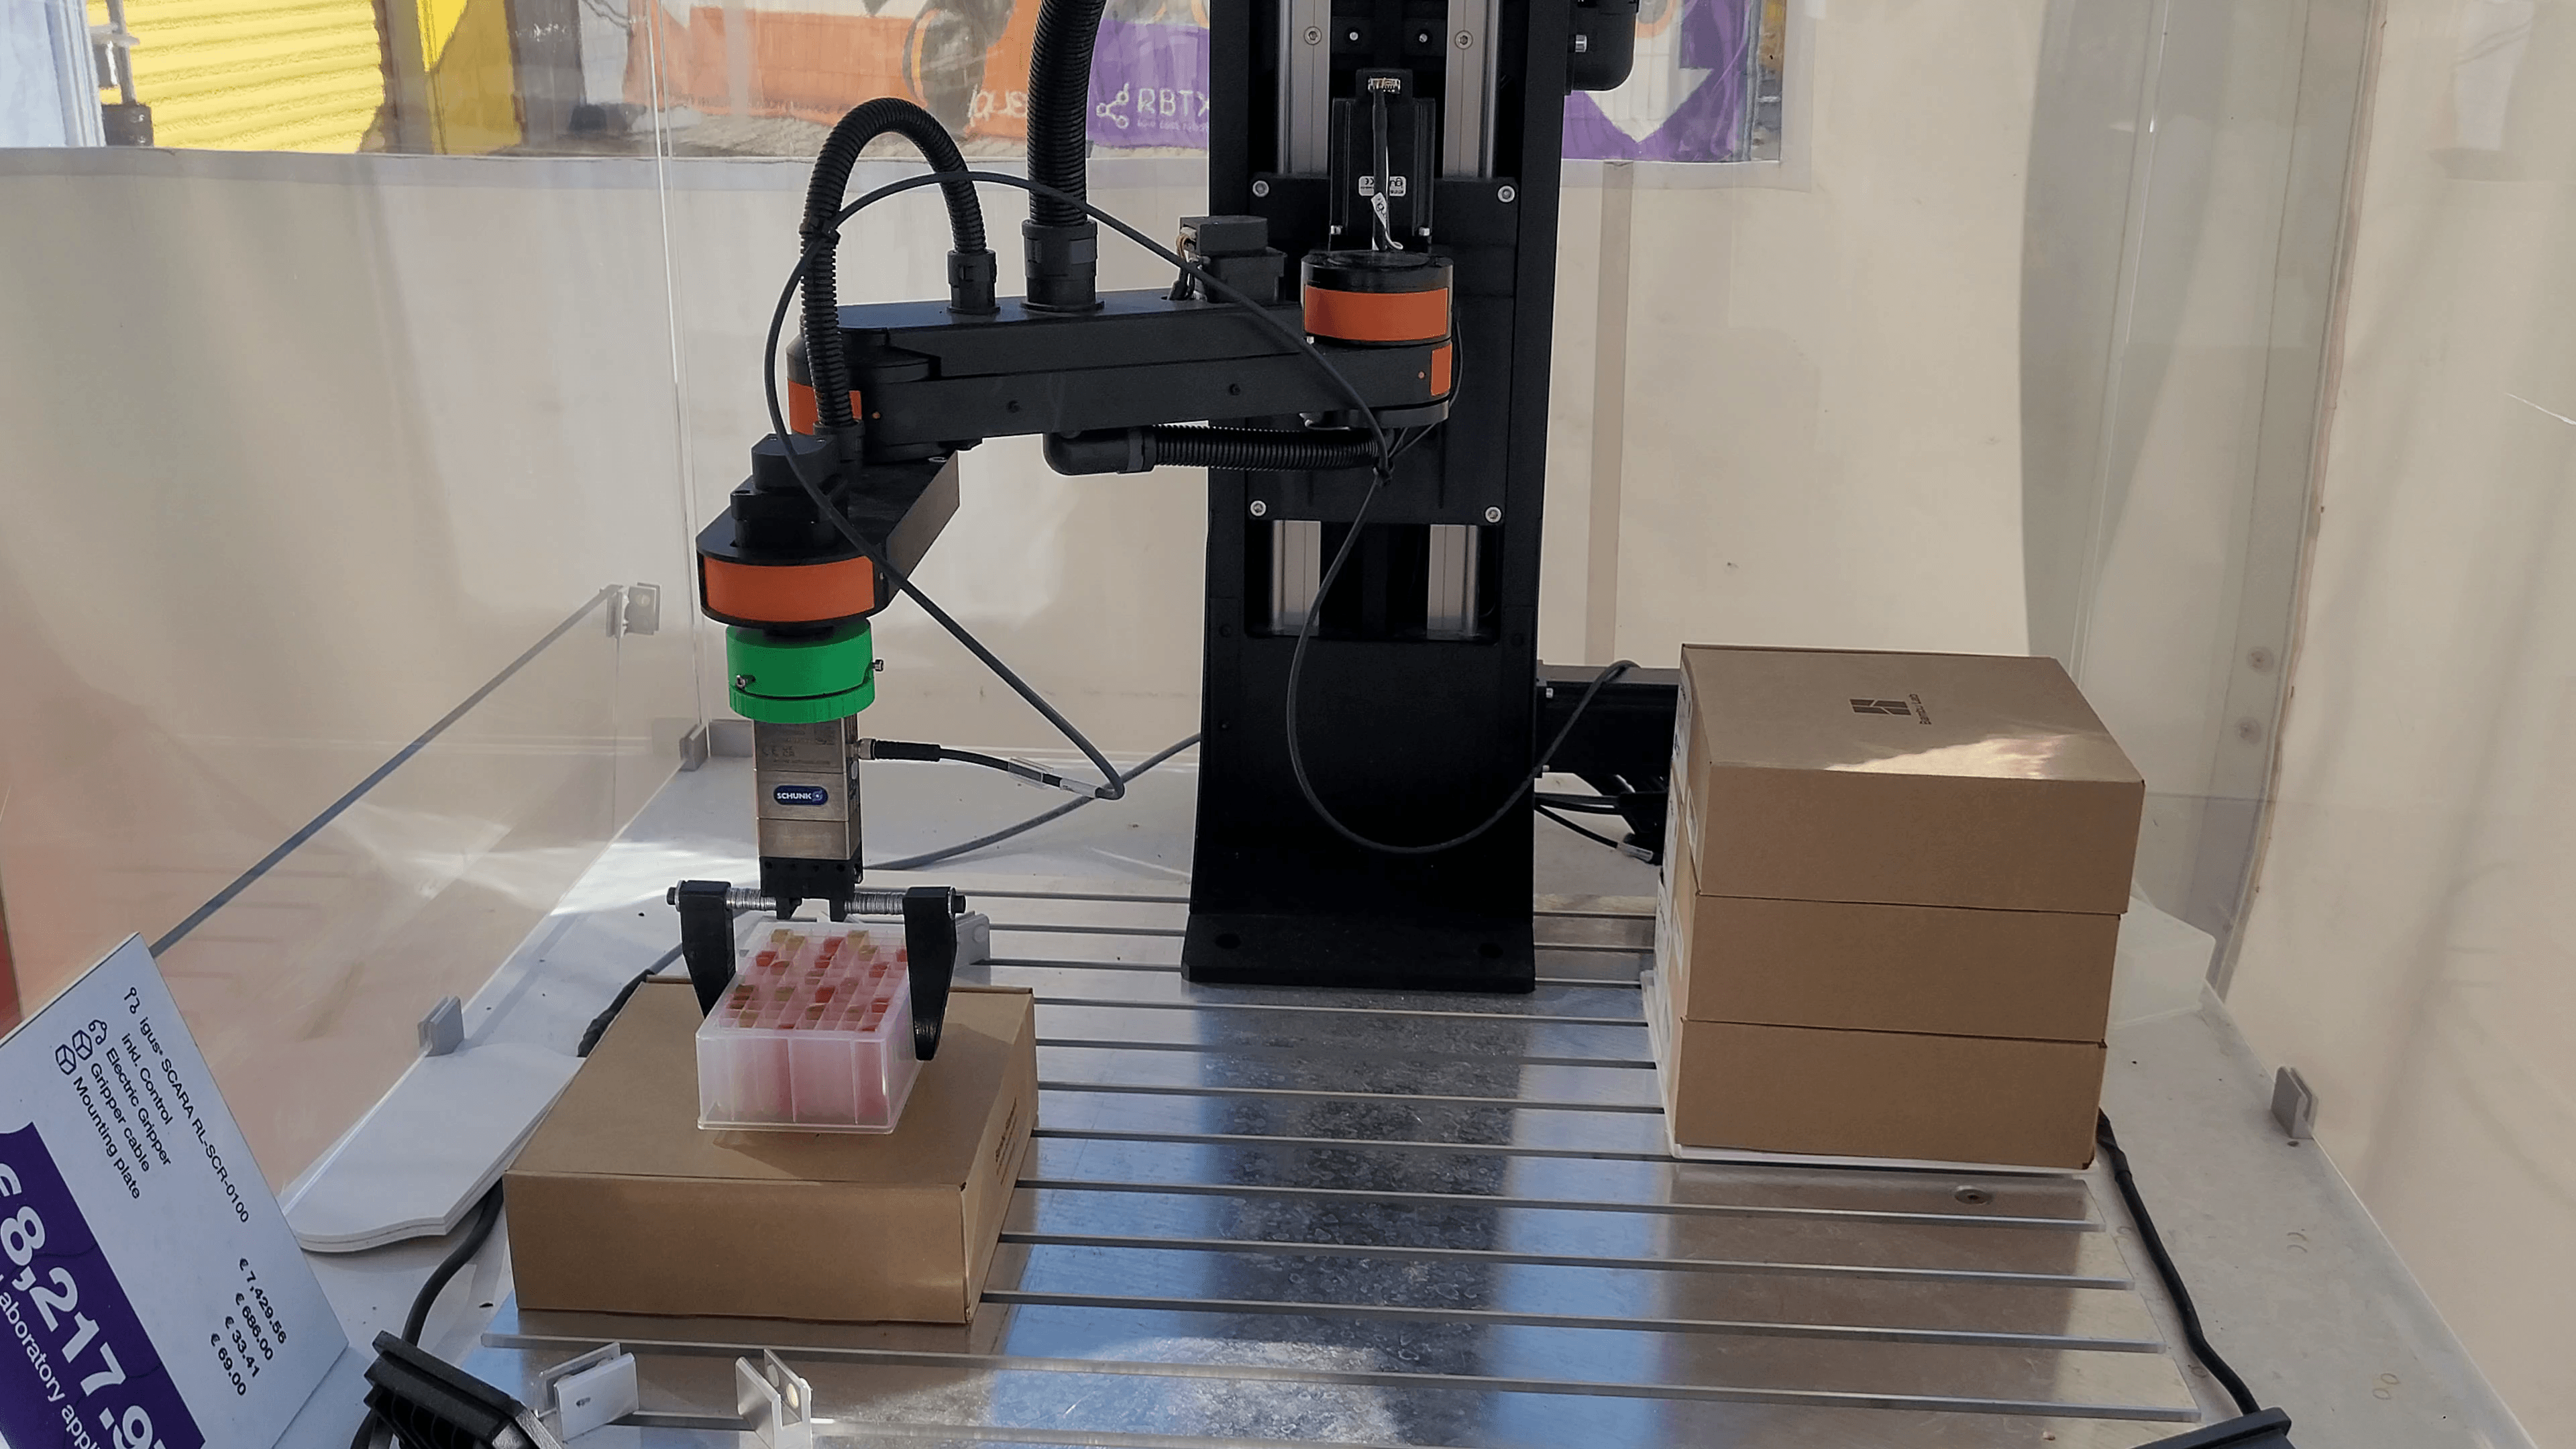 Laboratory application with igus SCARA robot